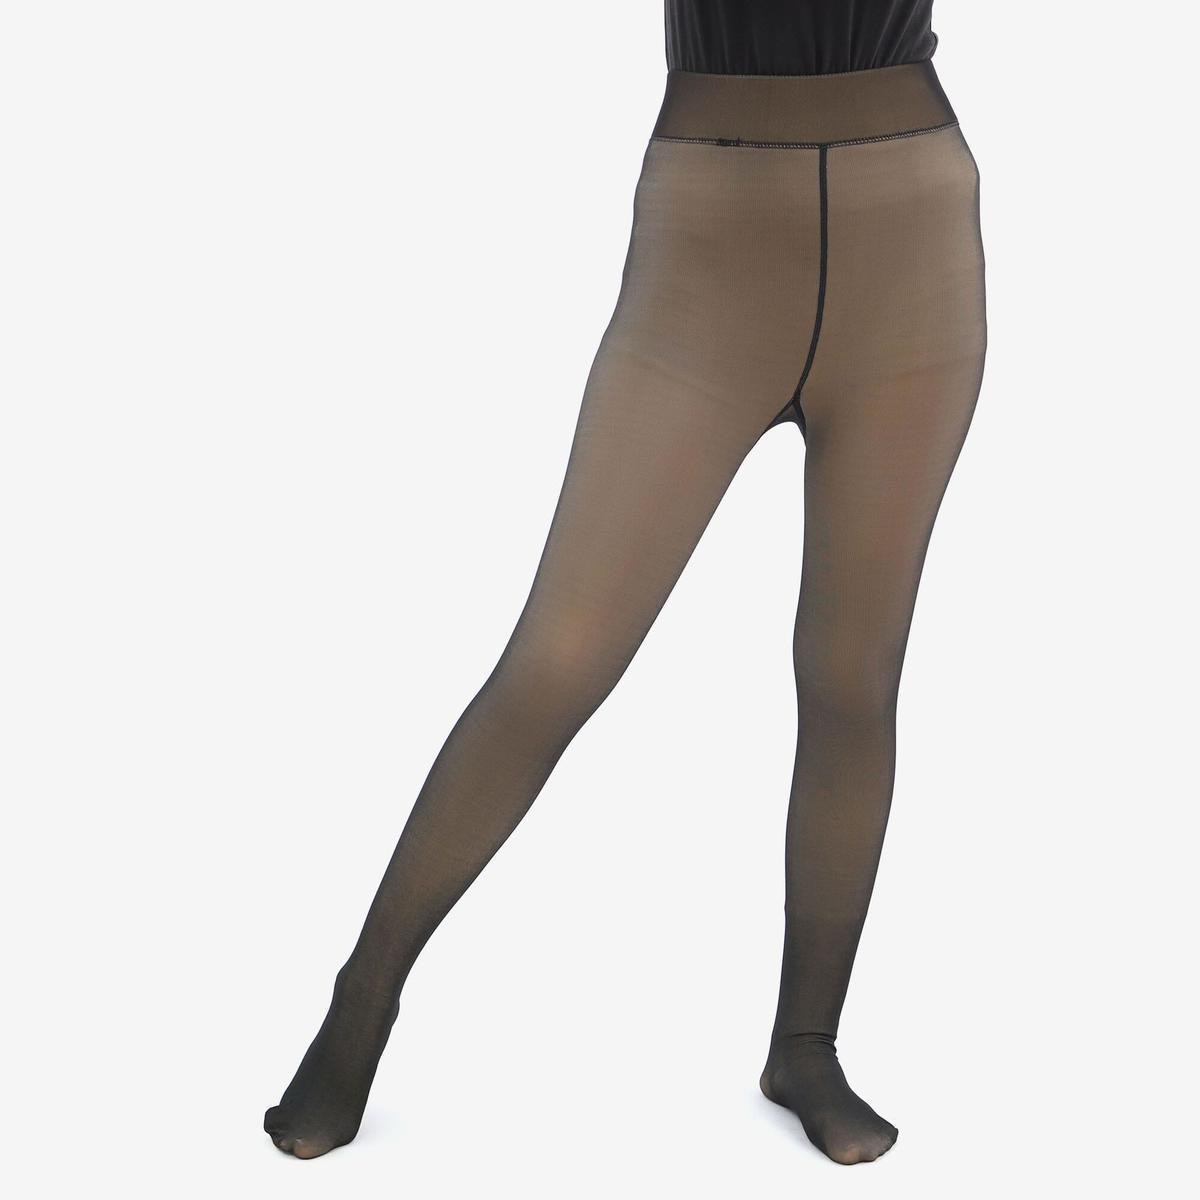 black cottom warm winter fake skin transparent high waist stretchy leggings stockings